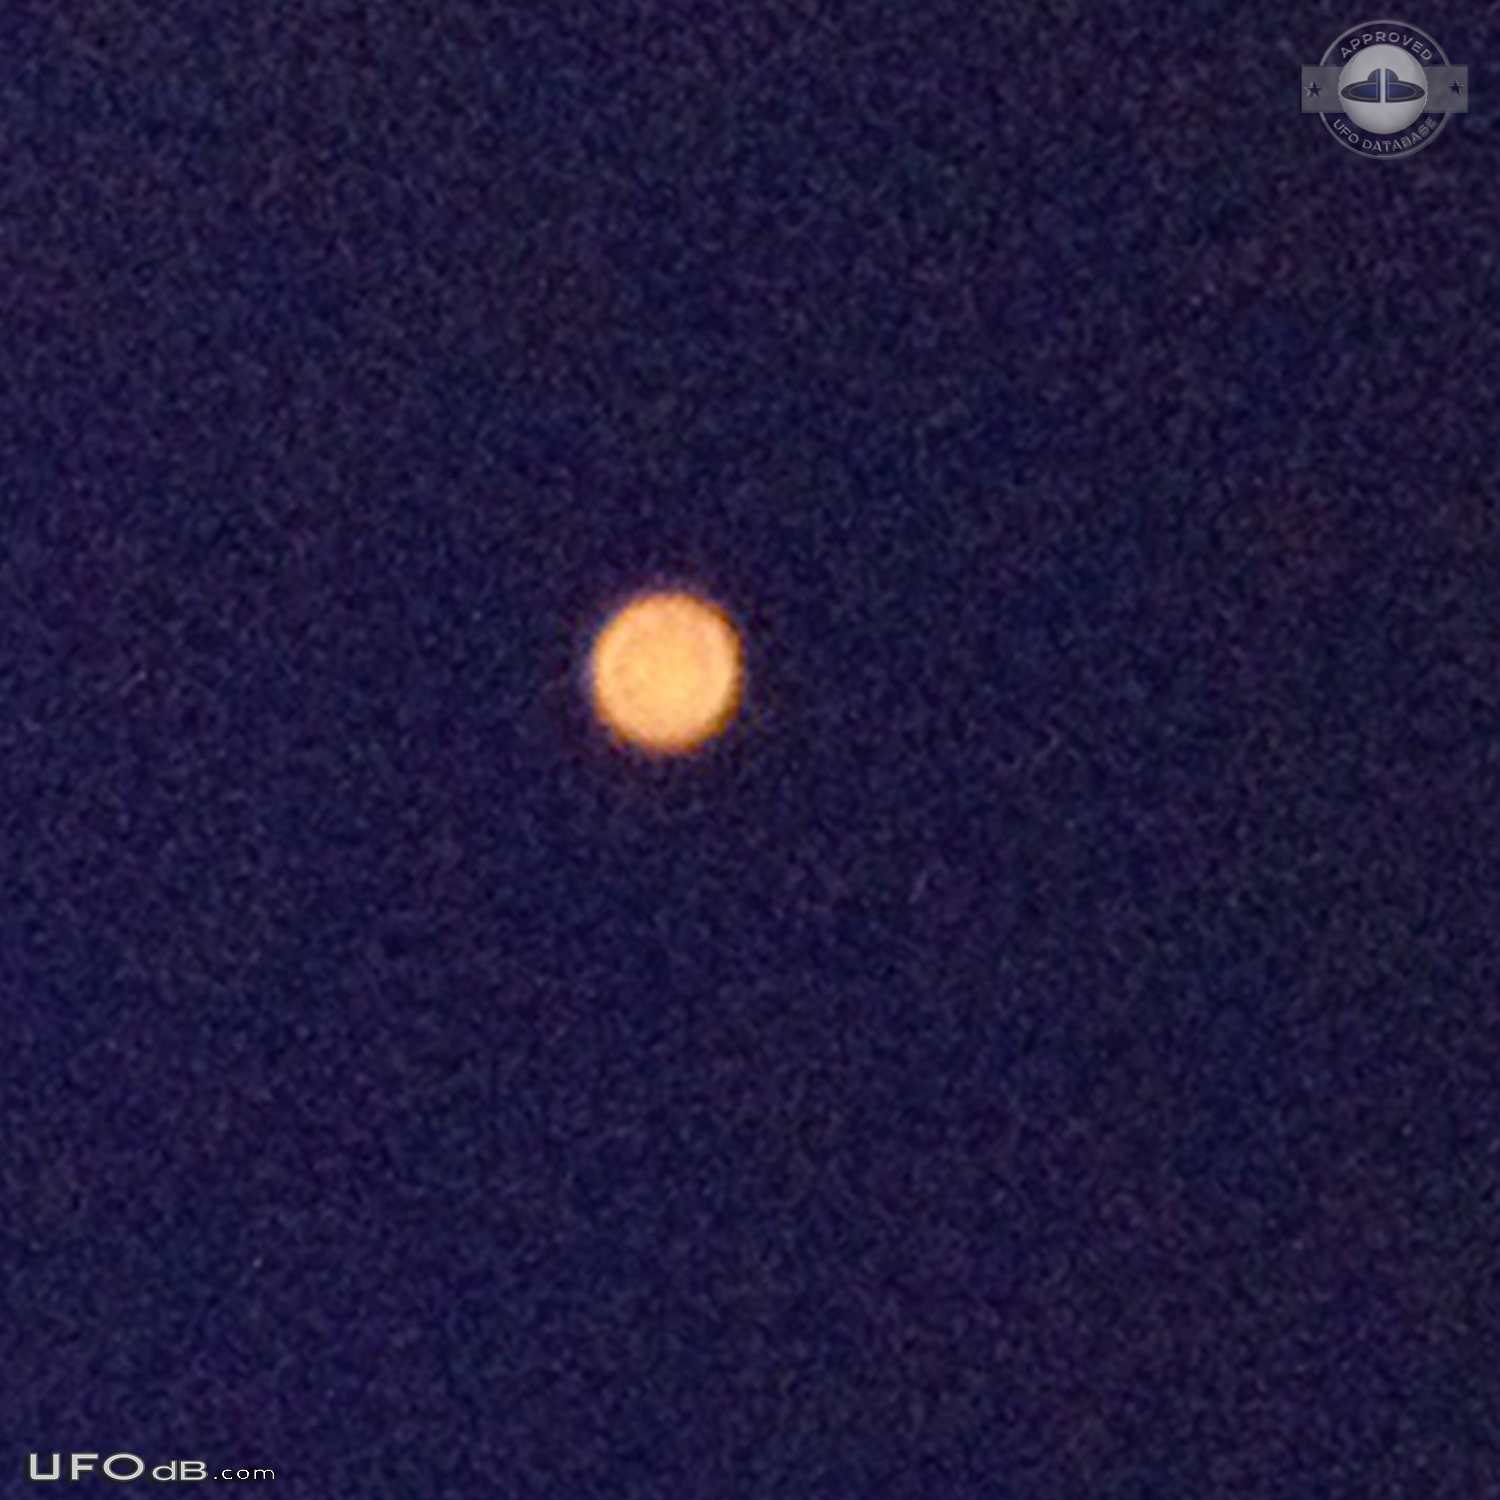 Orange orb UFO transparent edge ring - Huntington Beach California USA UFO Picture #783-4